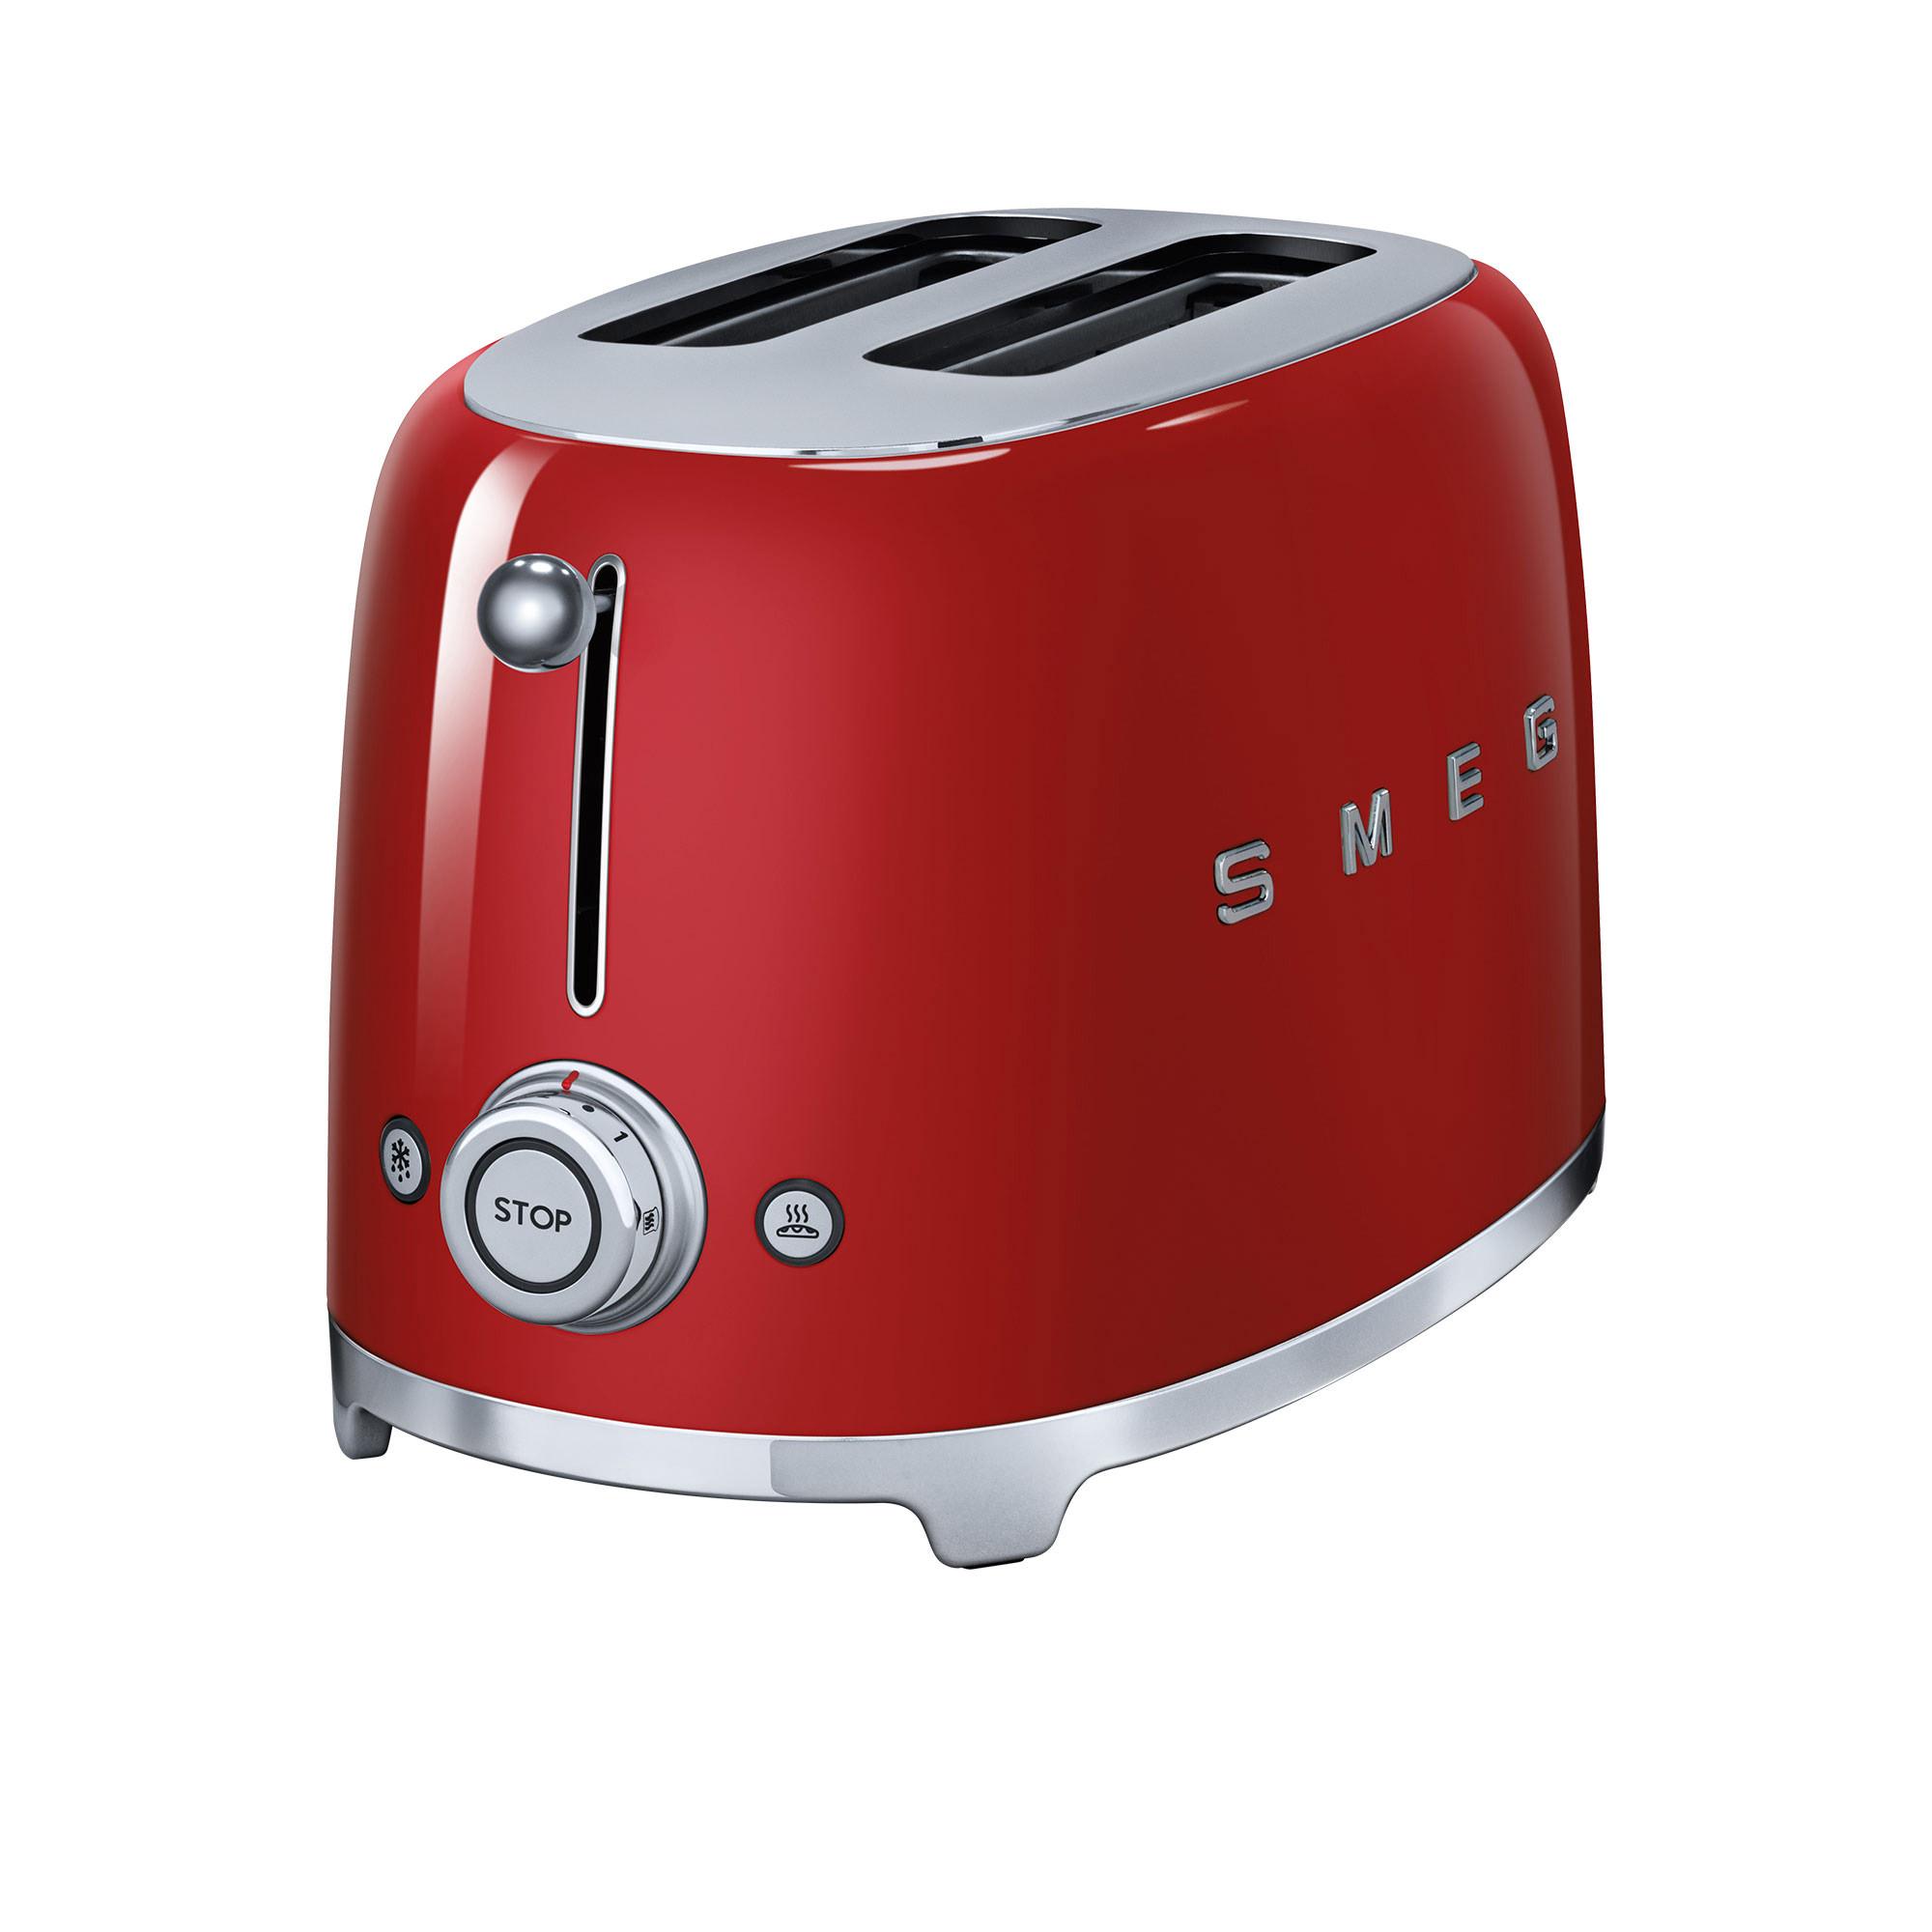 Smeg 50's Retro Style 2 Slice Toaster Red Image 1